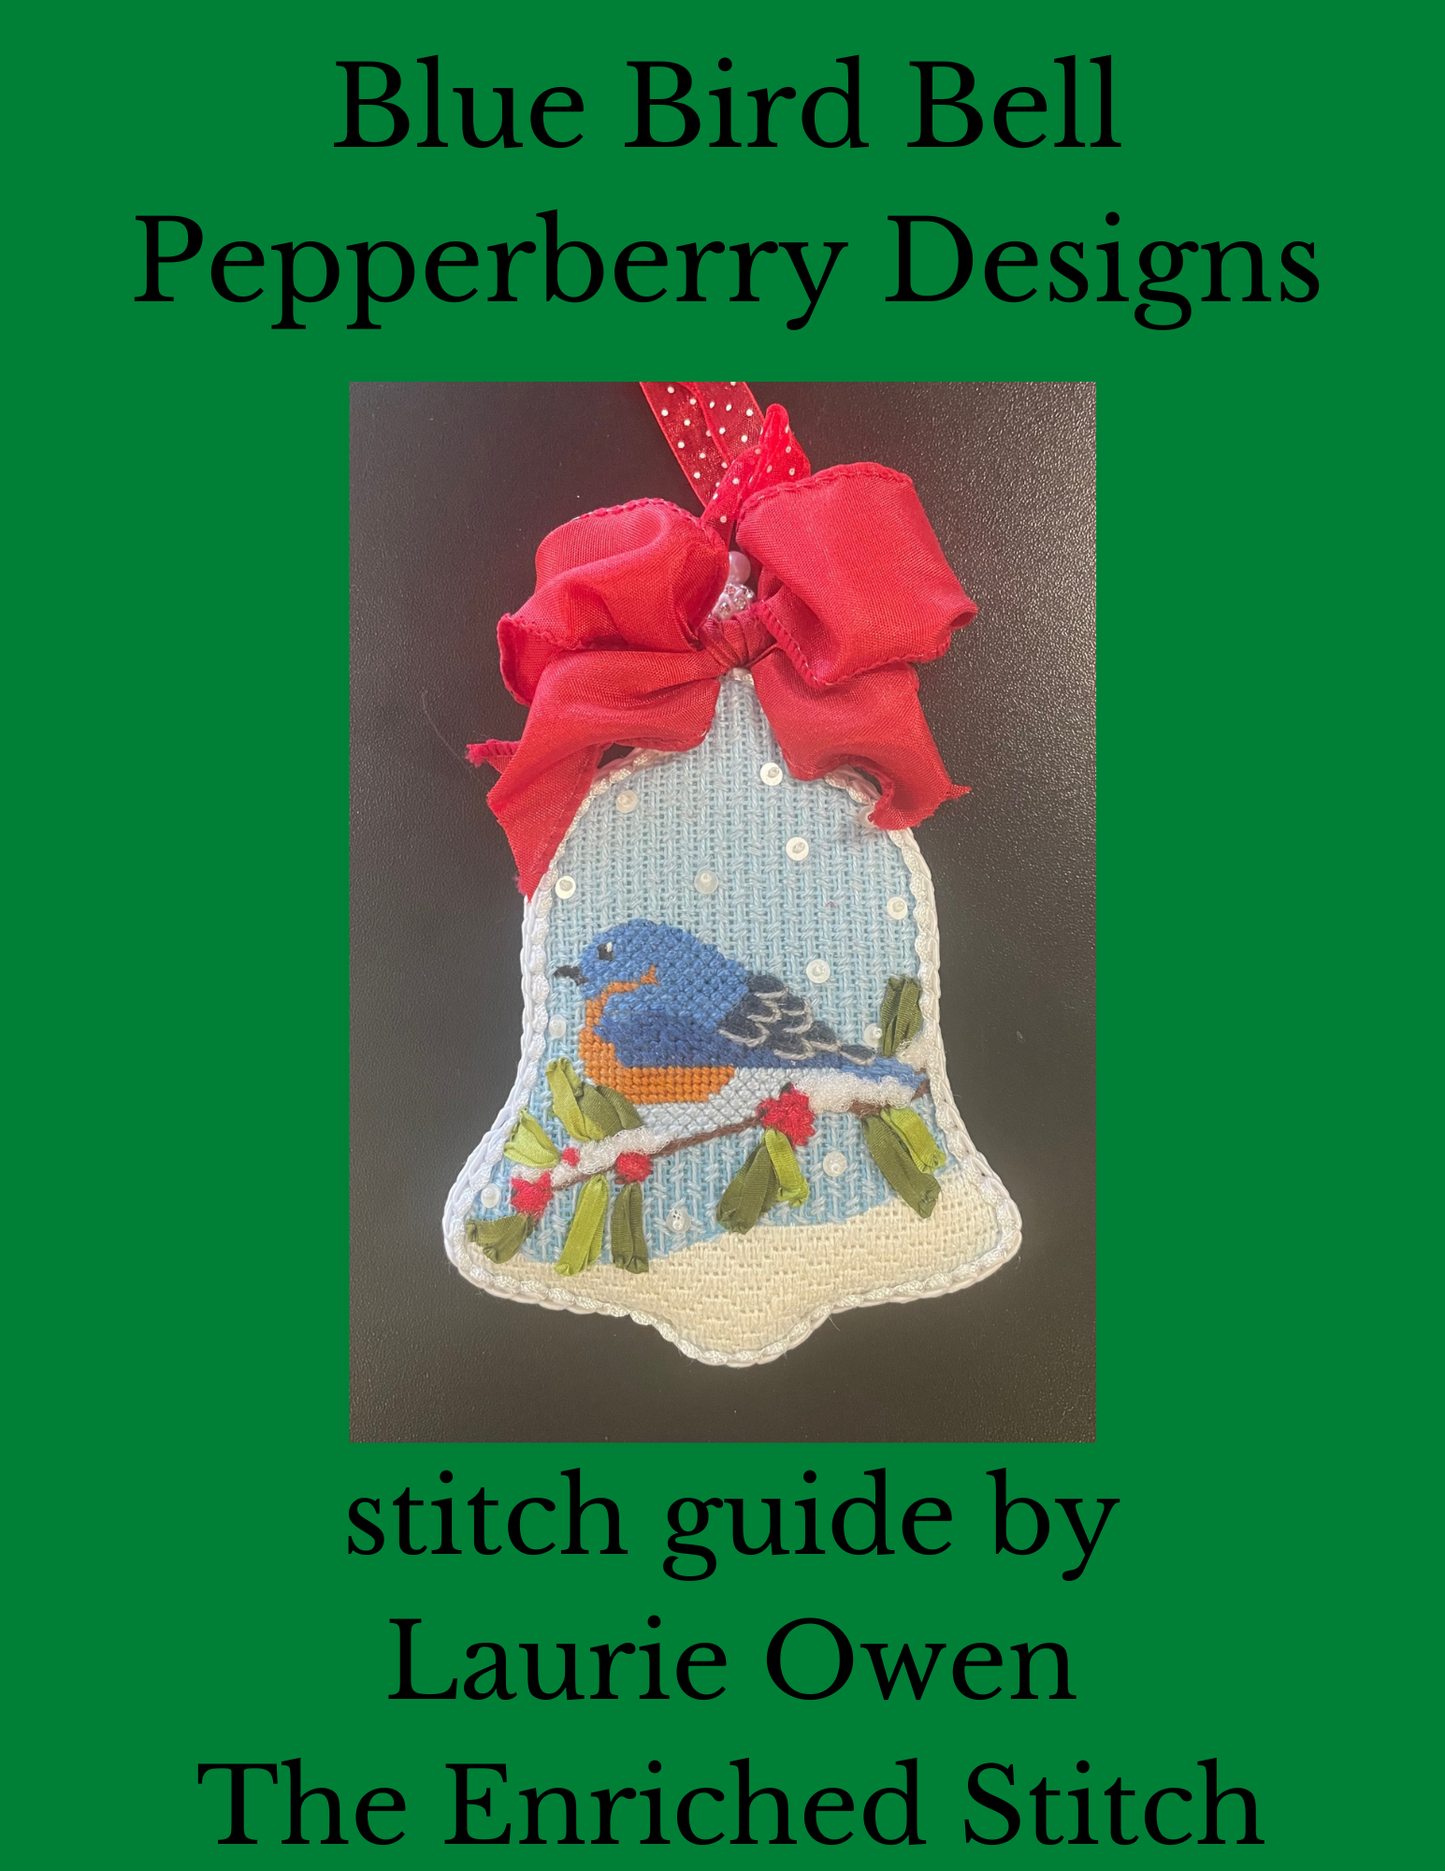 Blue Bird Bell Stitch Guide